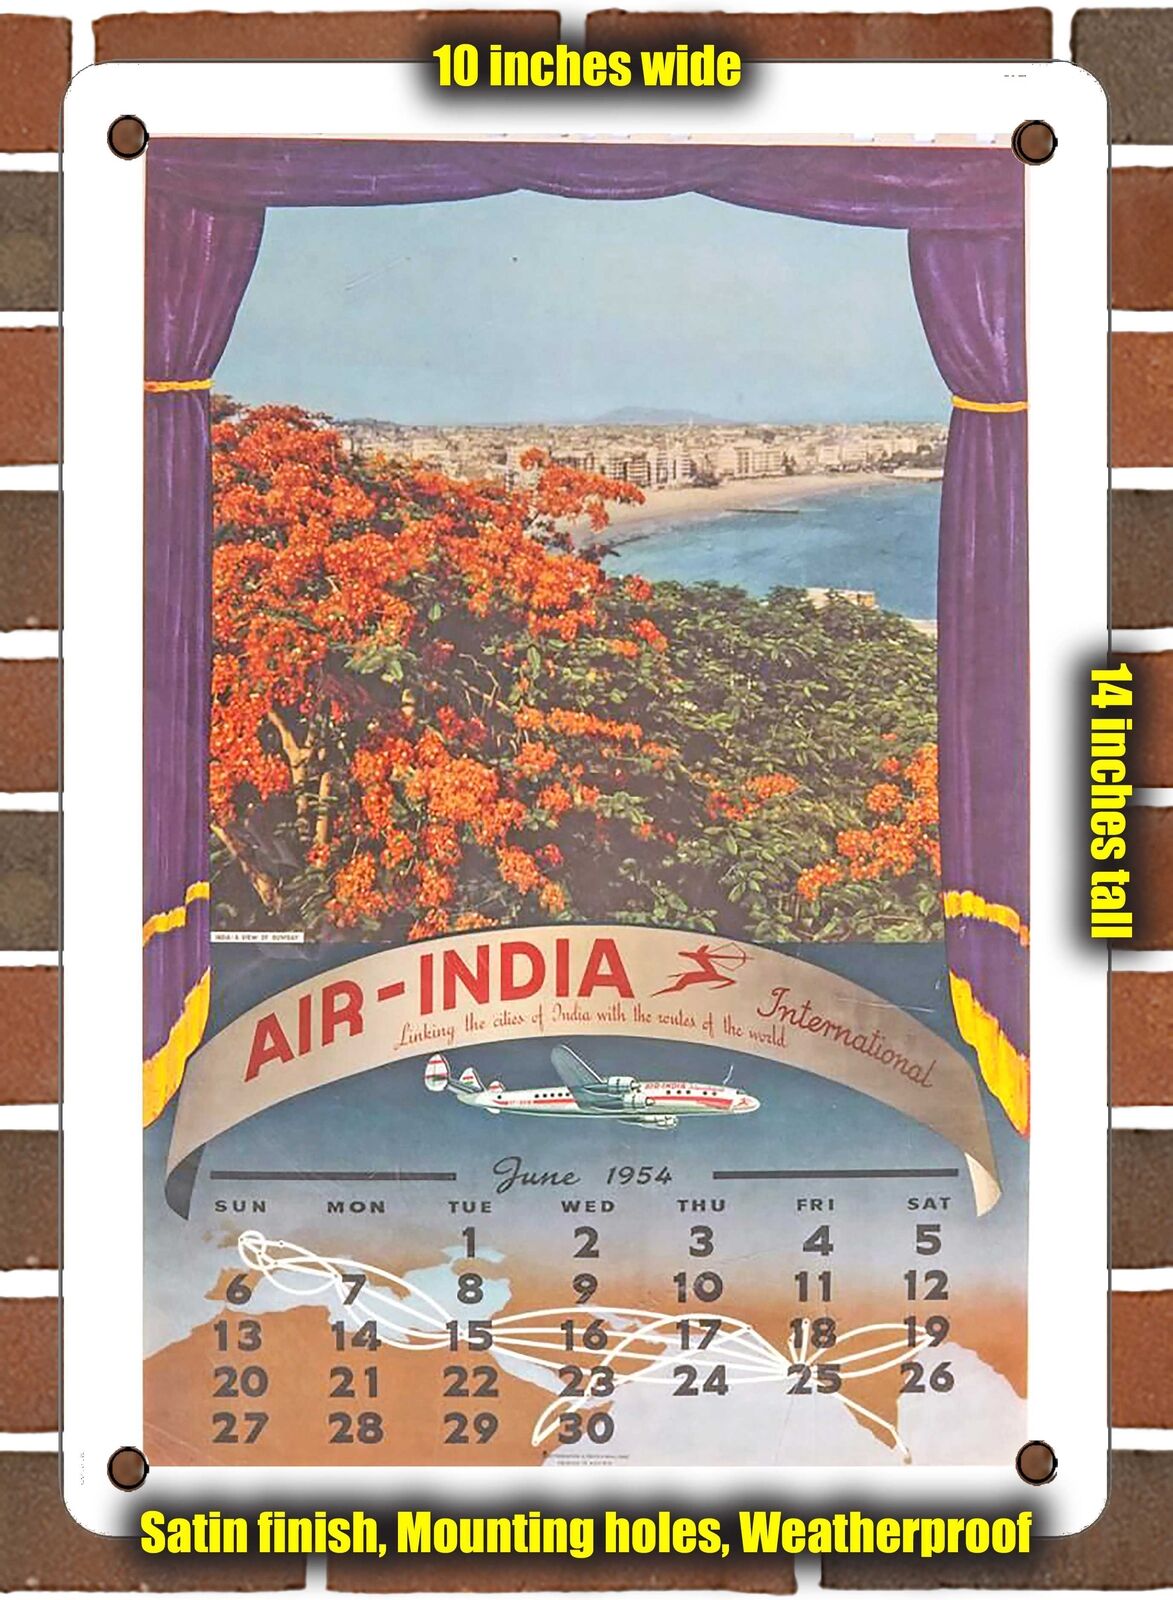 METAL SIGN - 1954 Air India International Calendar June 1954 - 10x14 Inches